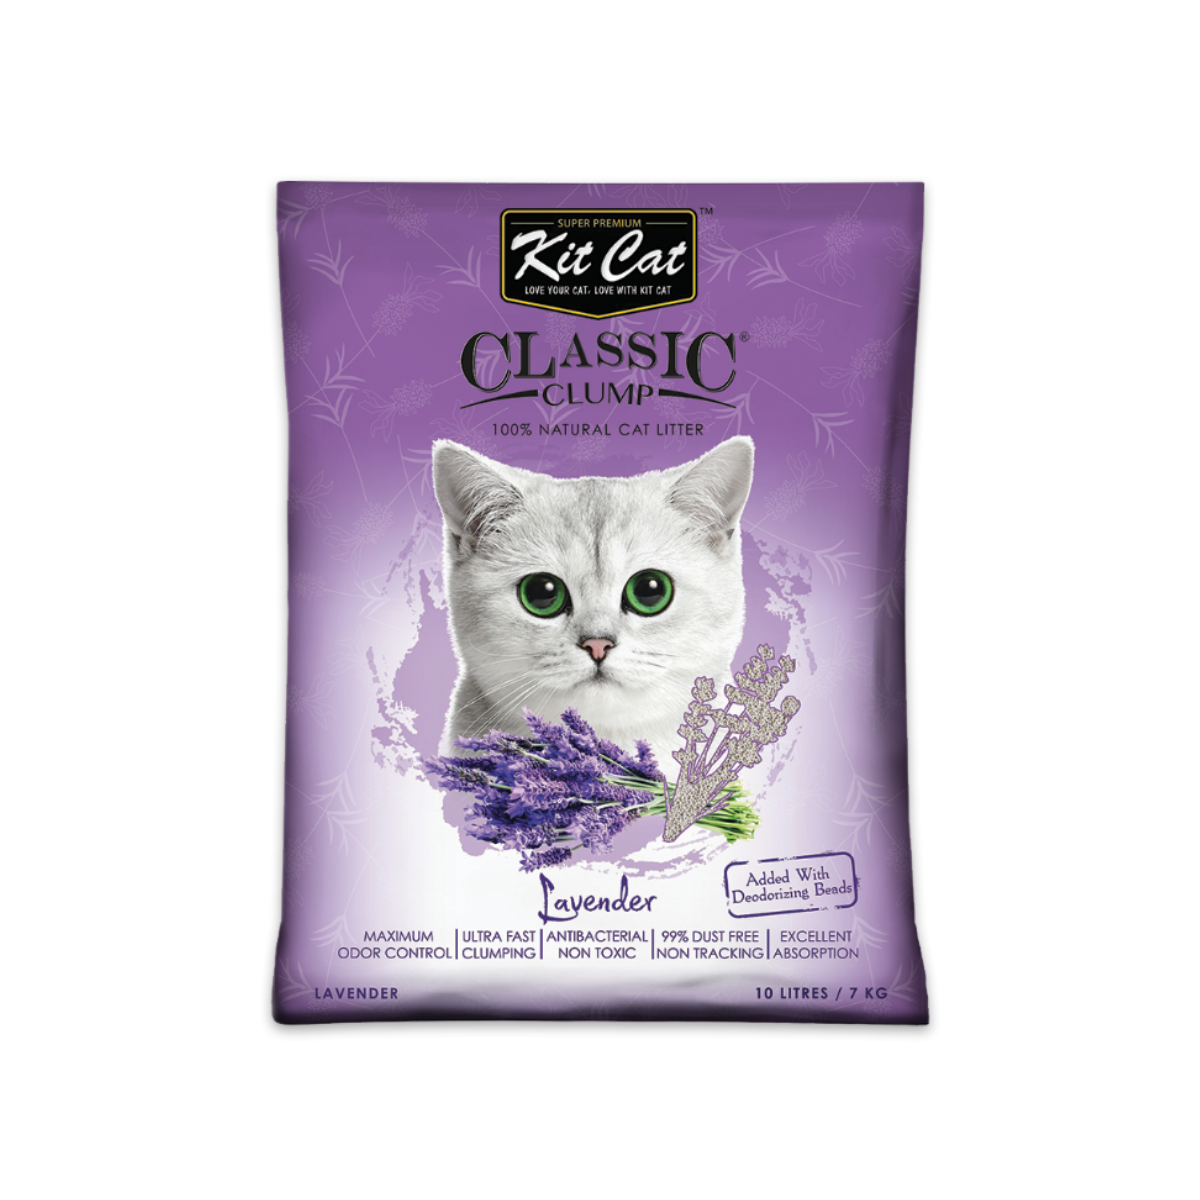 Kit Cat คิต แคท ทรายแมวเบนโทไนต์ สูตร Lavender ขนาด 10 ลิตร